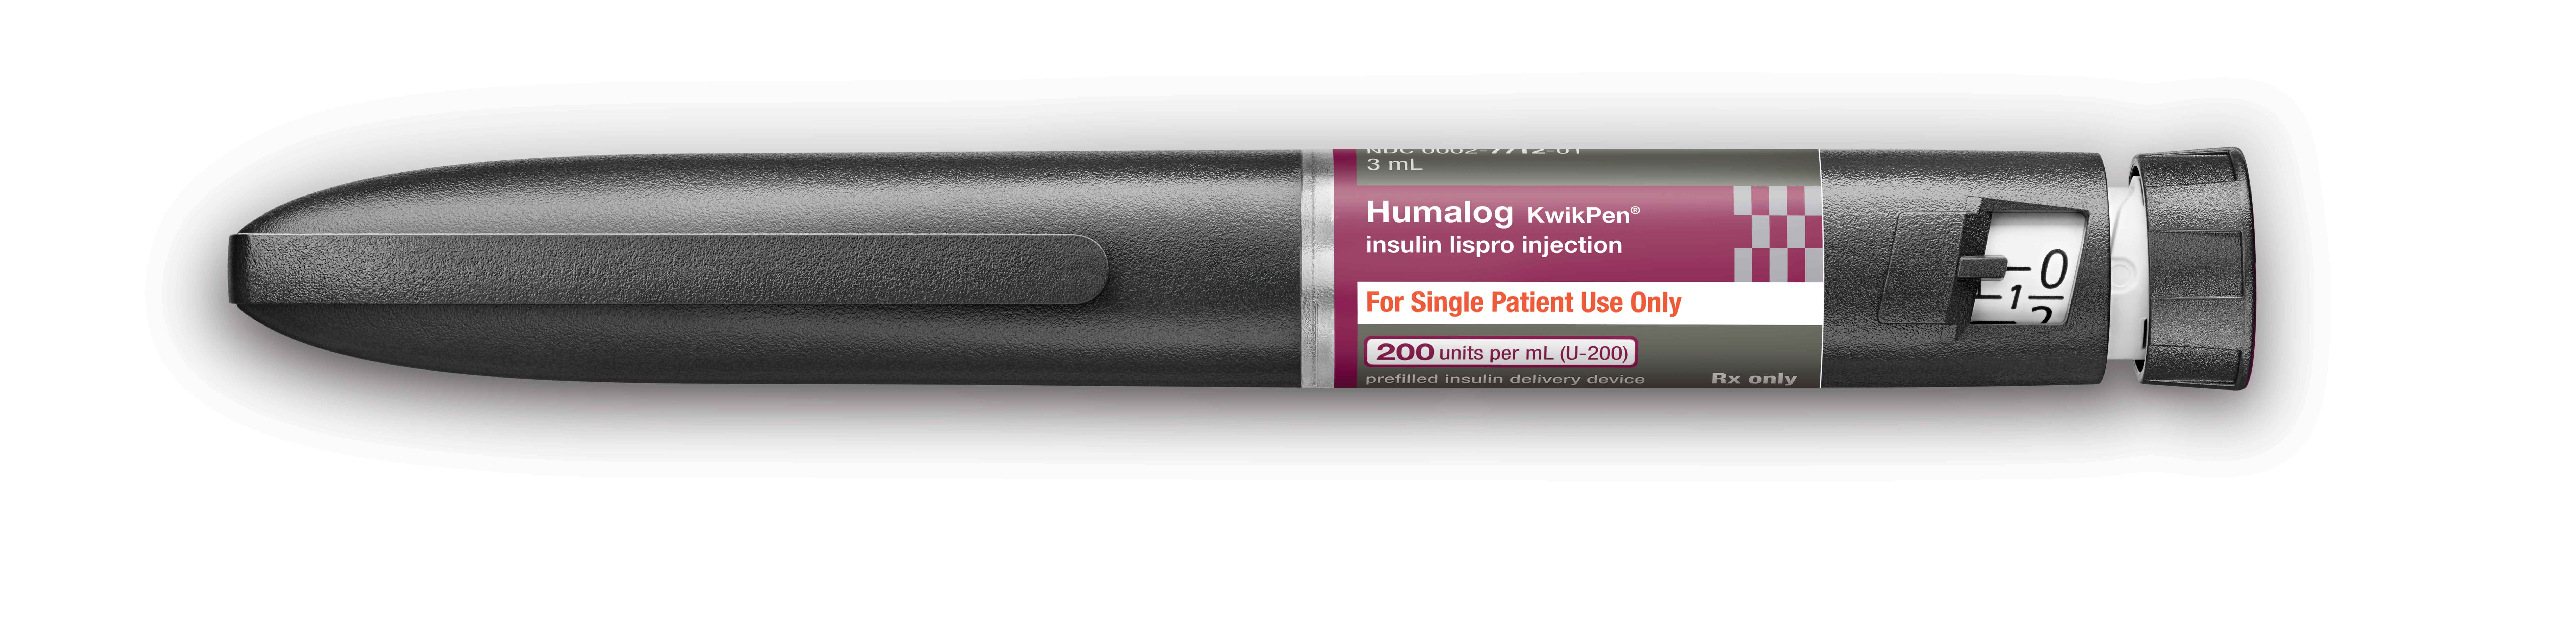 Humalog U-200 KwikPen insulin injector